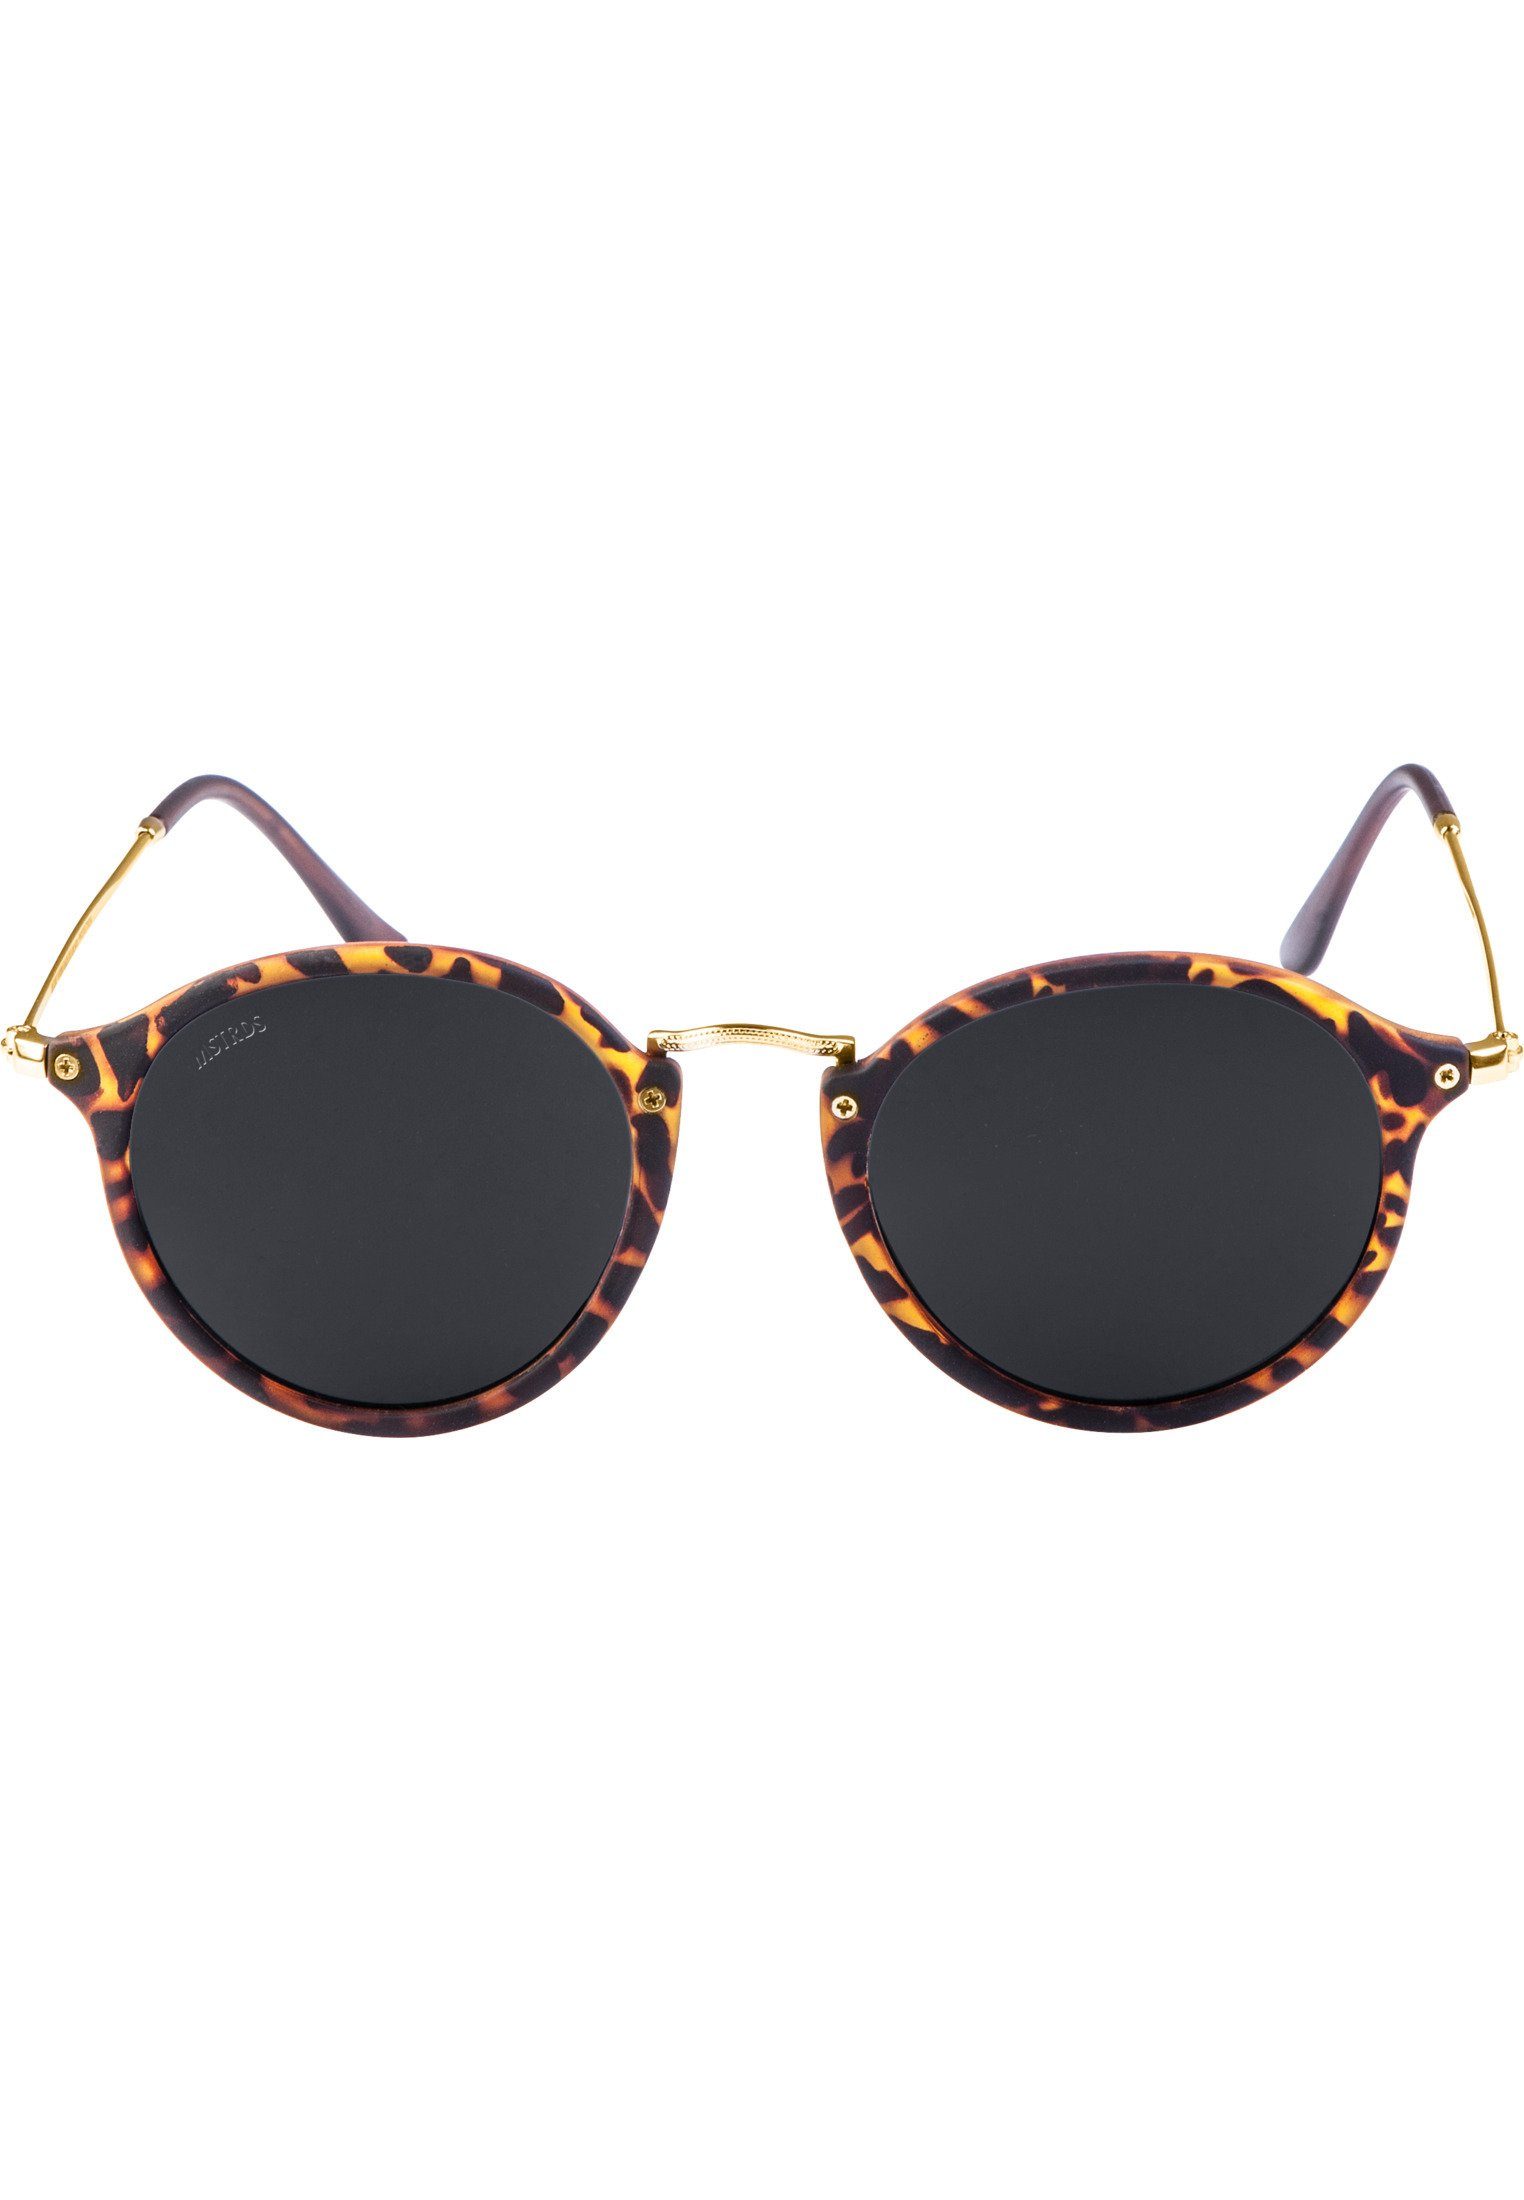 havanna/grey Sunglasses MSTRDS Sonnenbrille Spy Accessoires